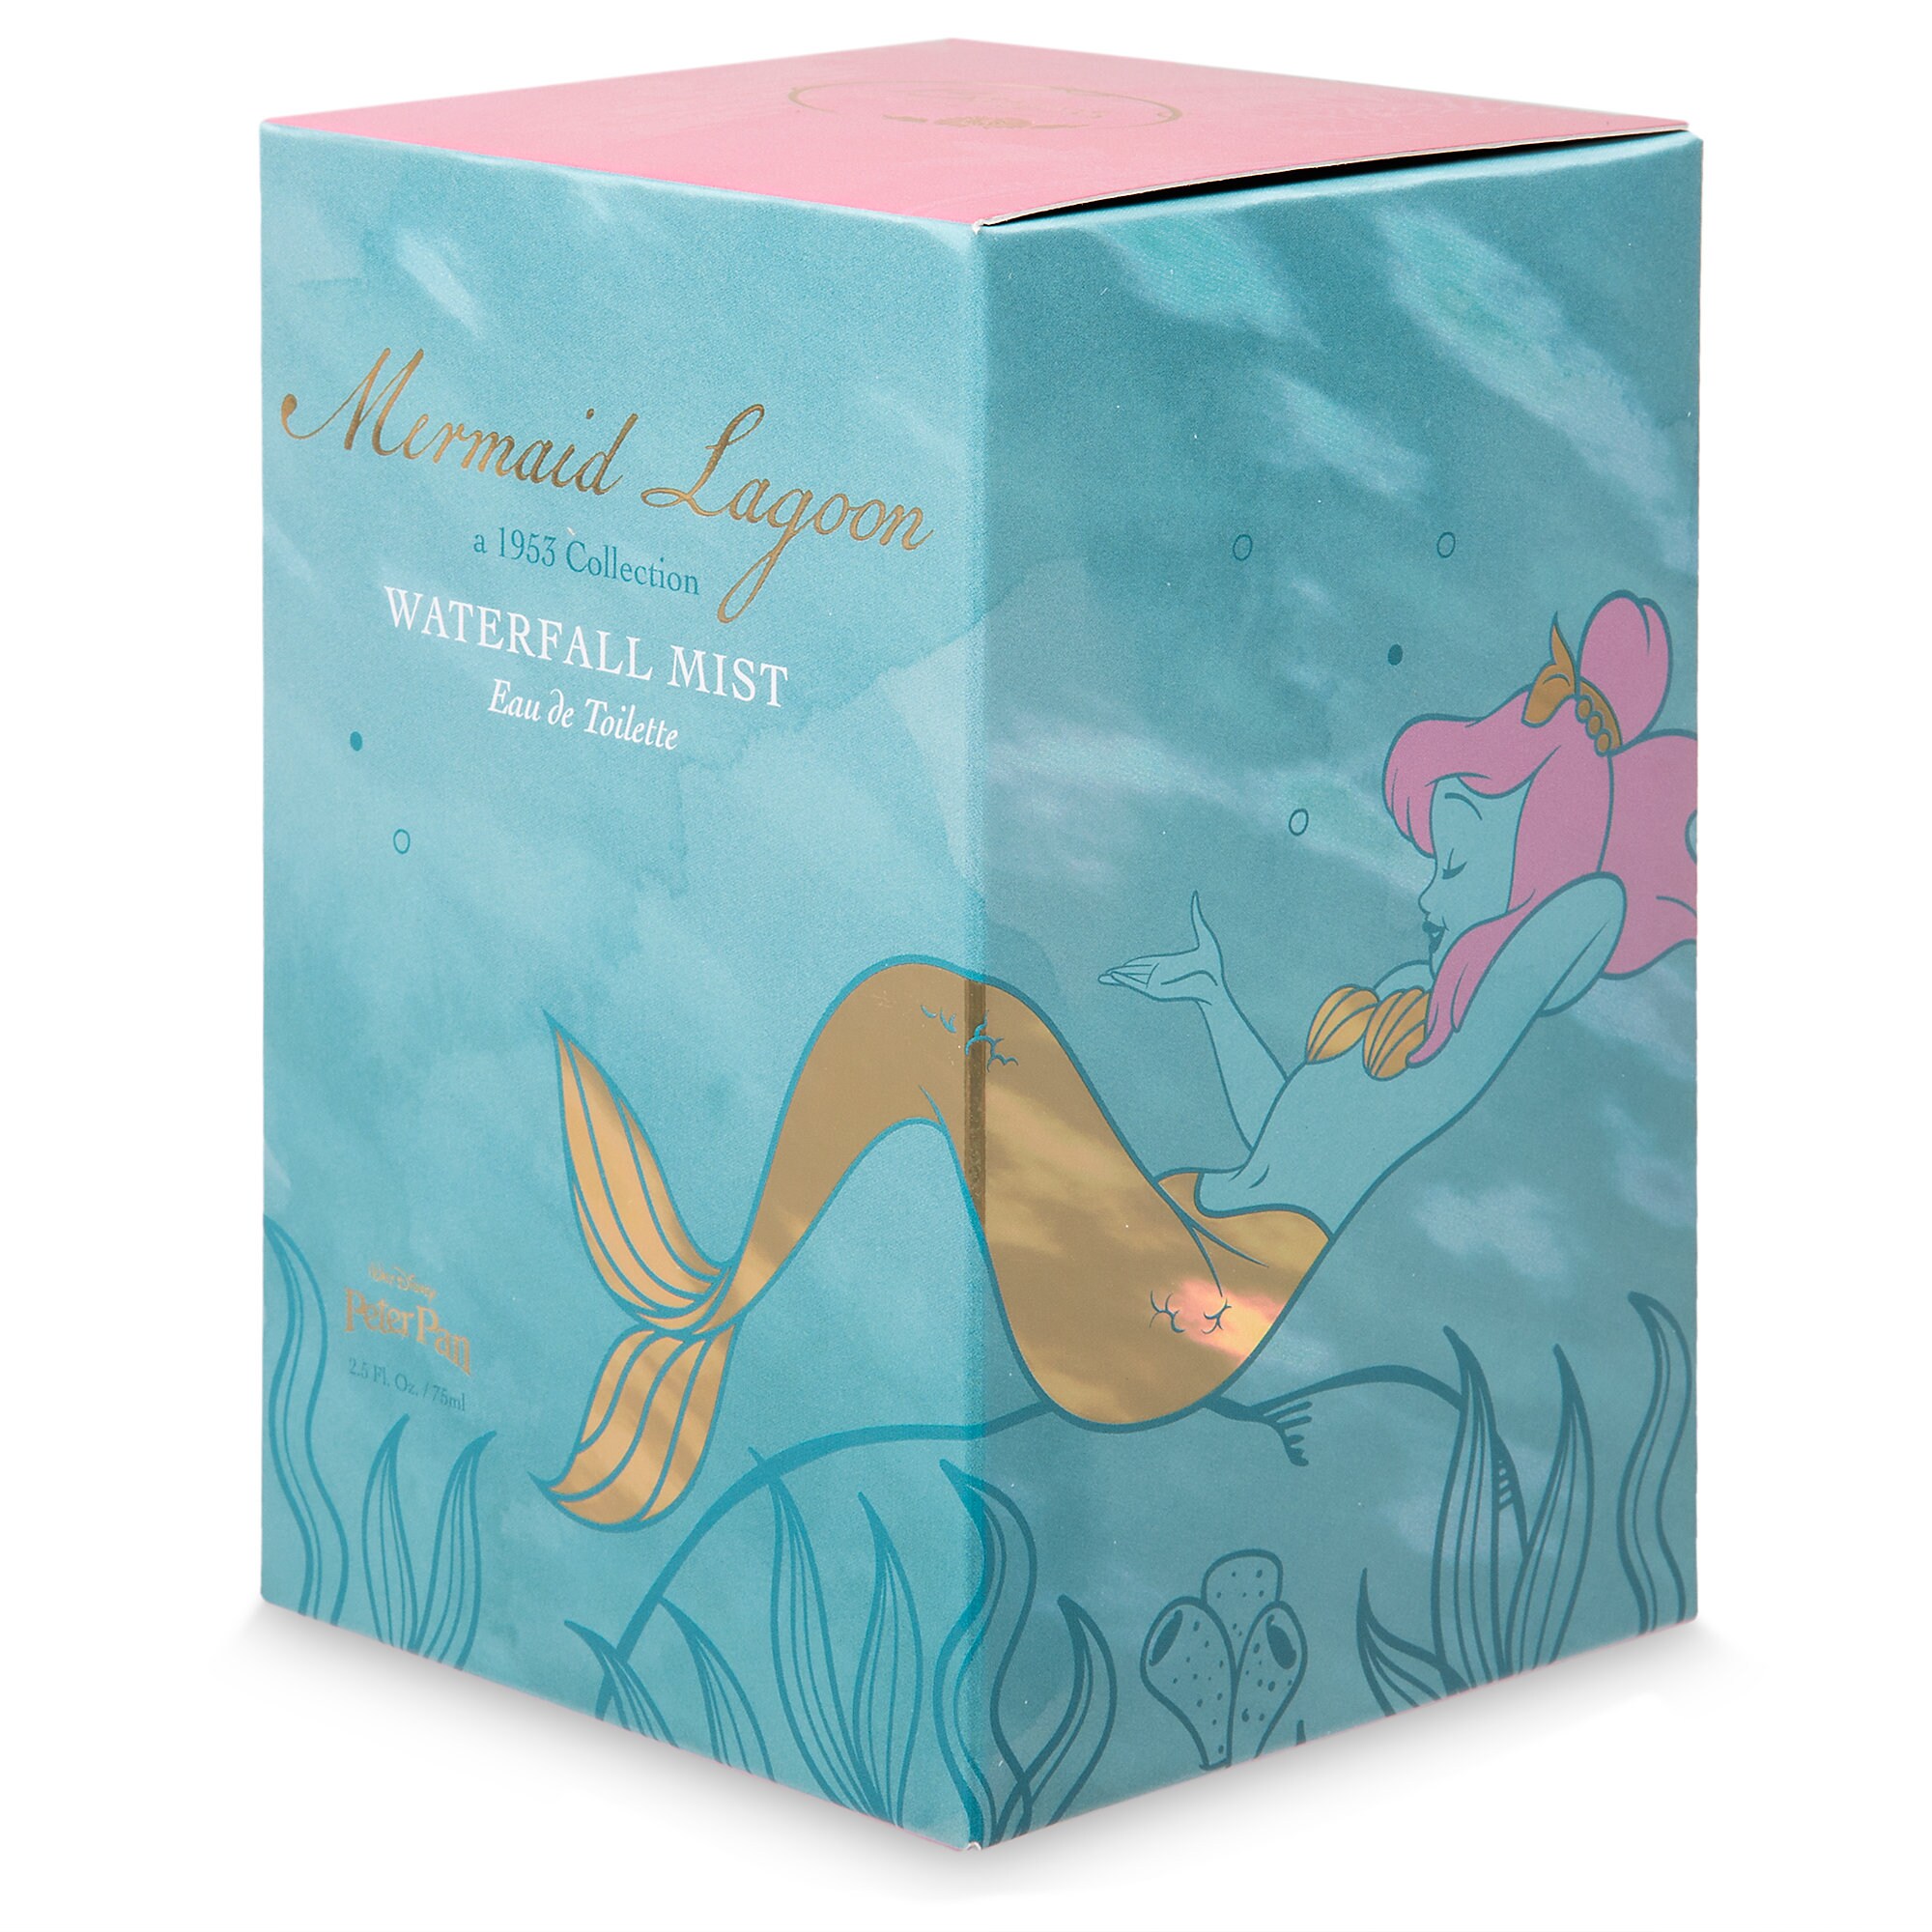 Peter Pan Mermaid Lagoon ''Waterfall Mist'' Fragrance by Bésame